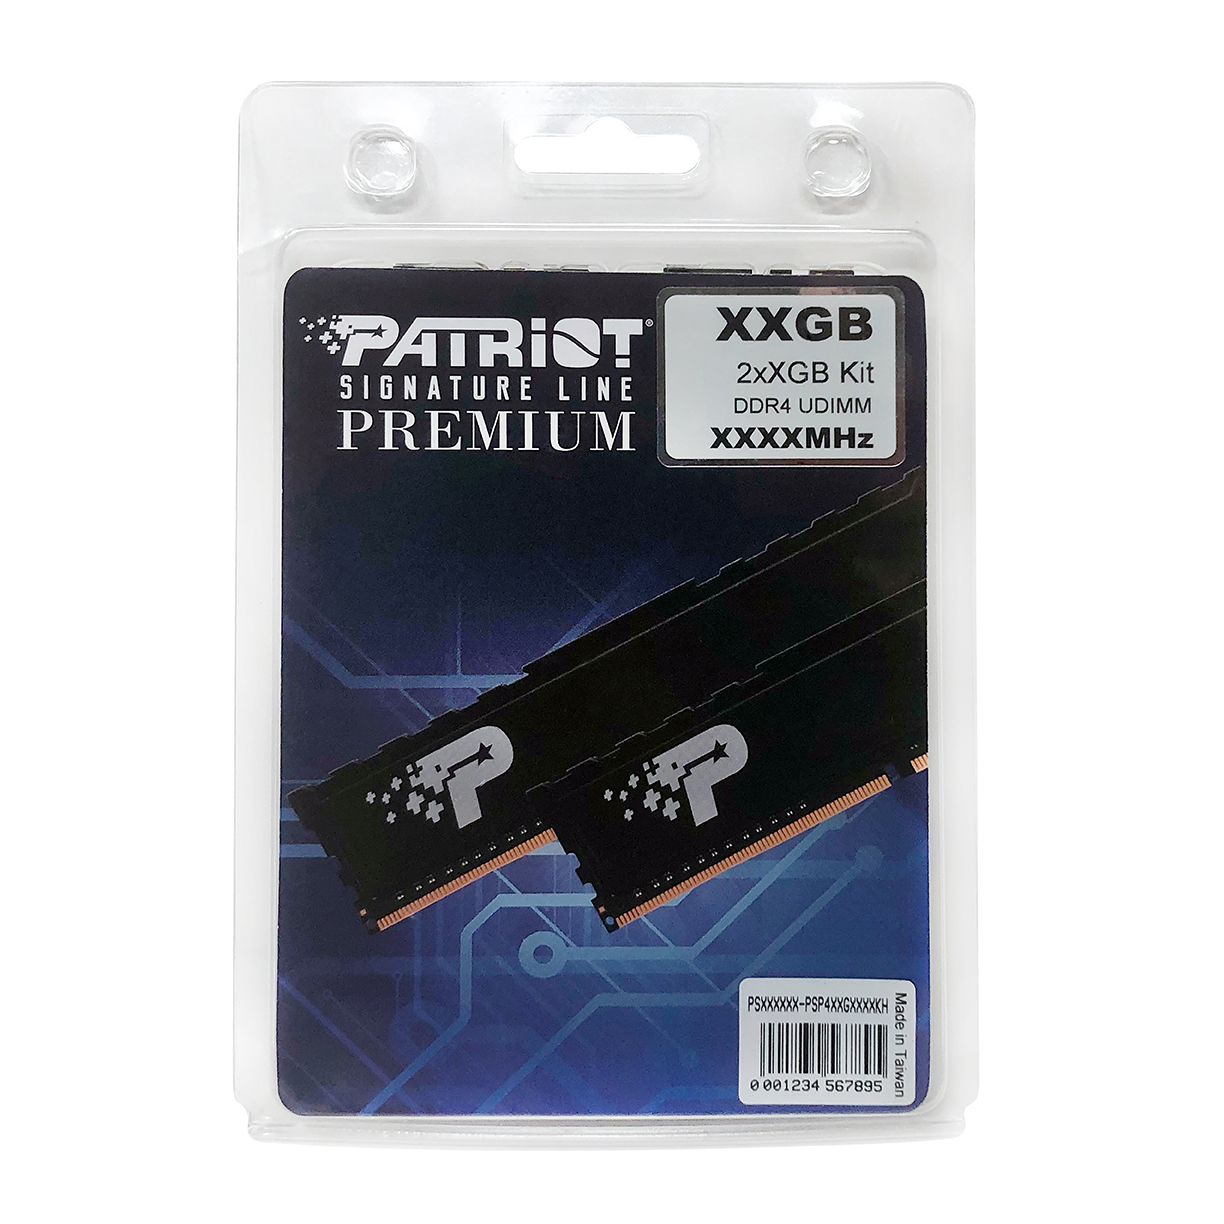 Patriot Signature Premium Series - DDR4 UDIMM PC4-21300 (2666MHz) CL19_Dual Kit with Heatshield